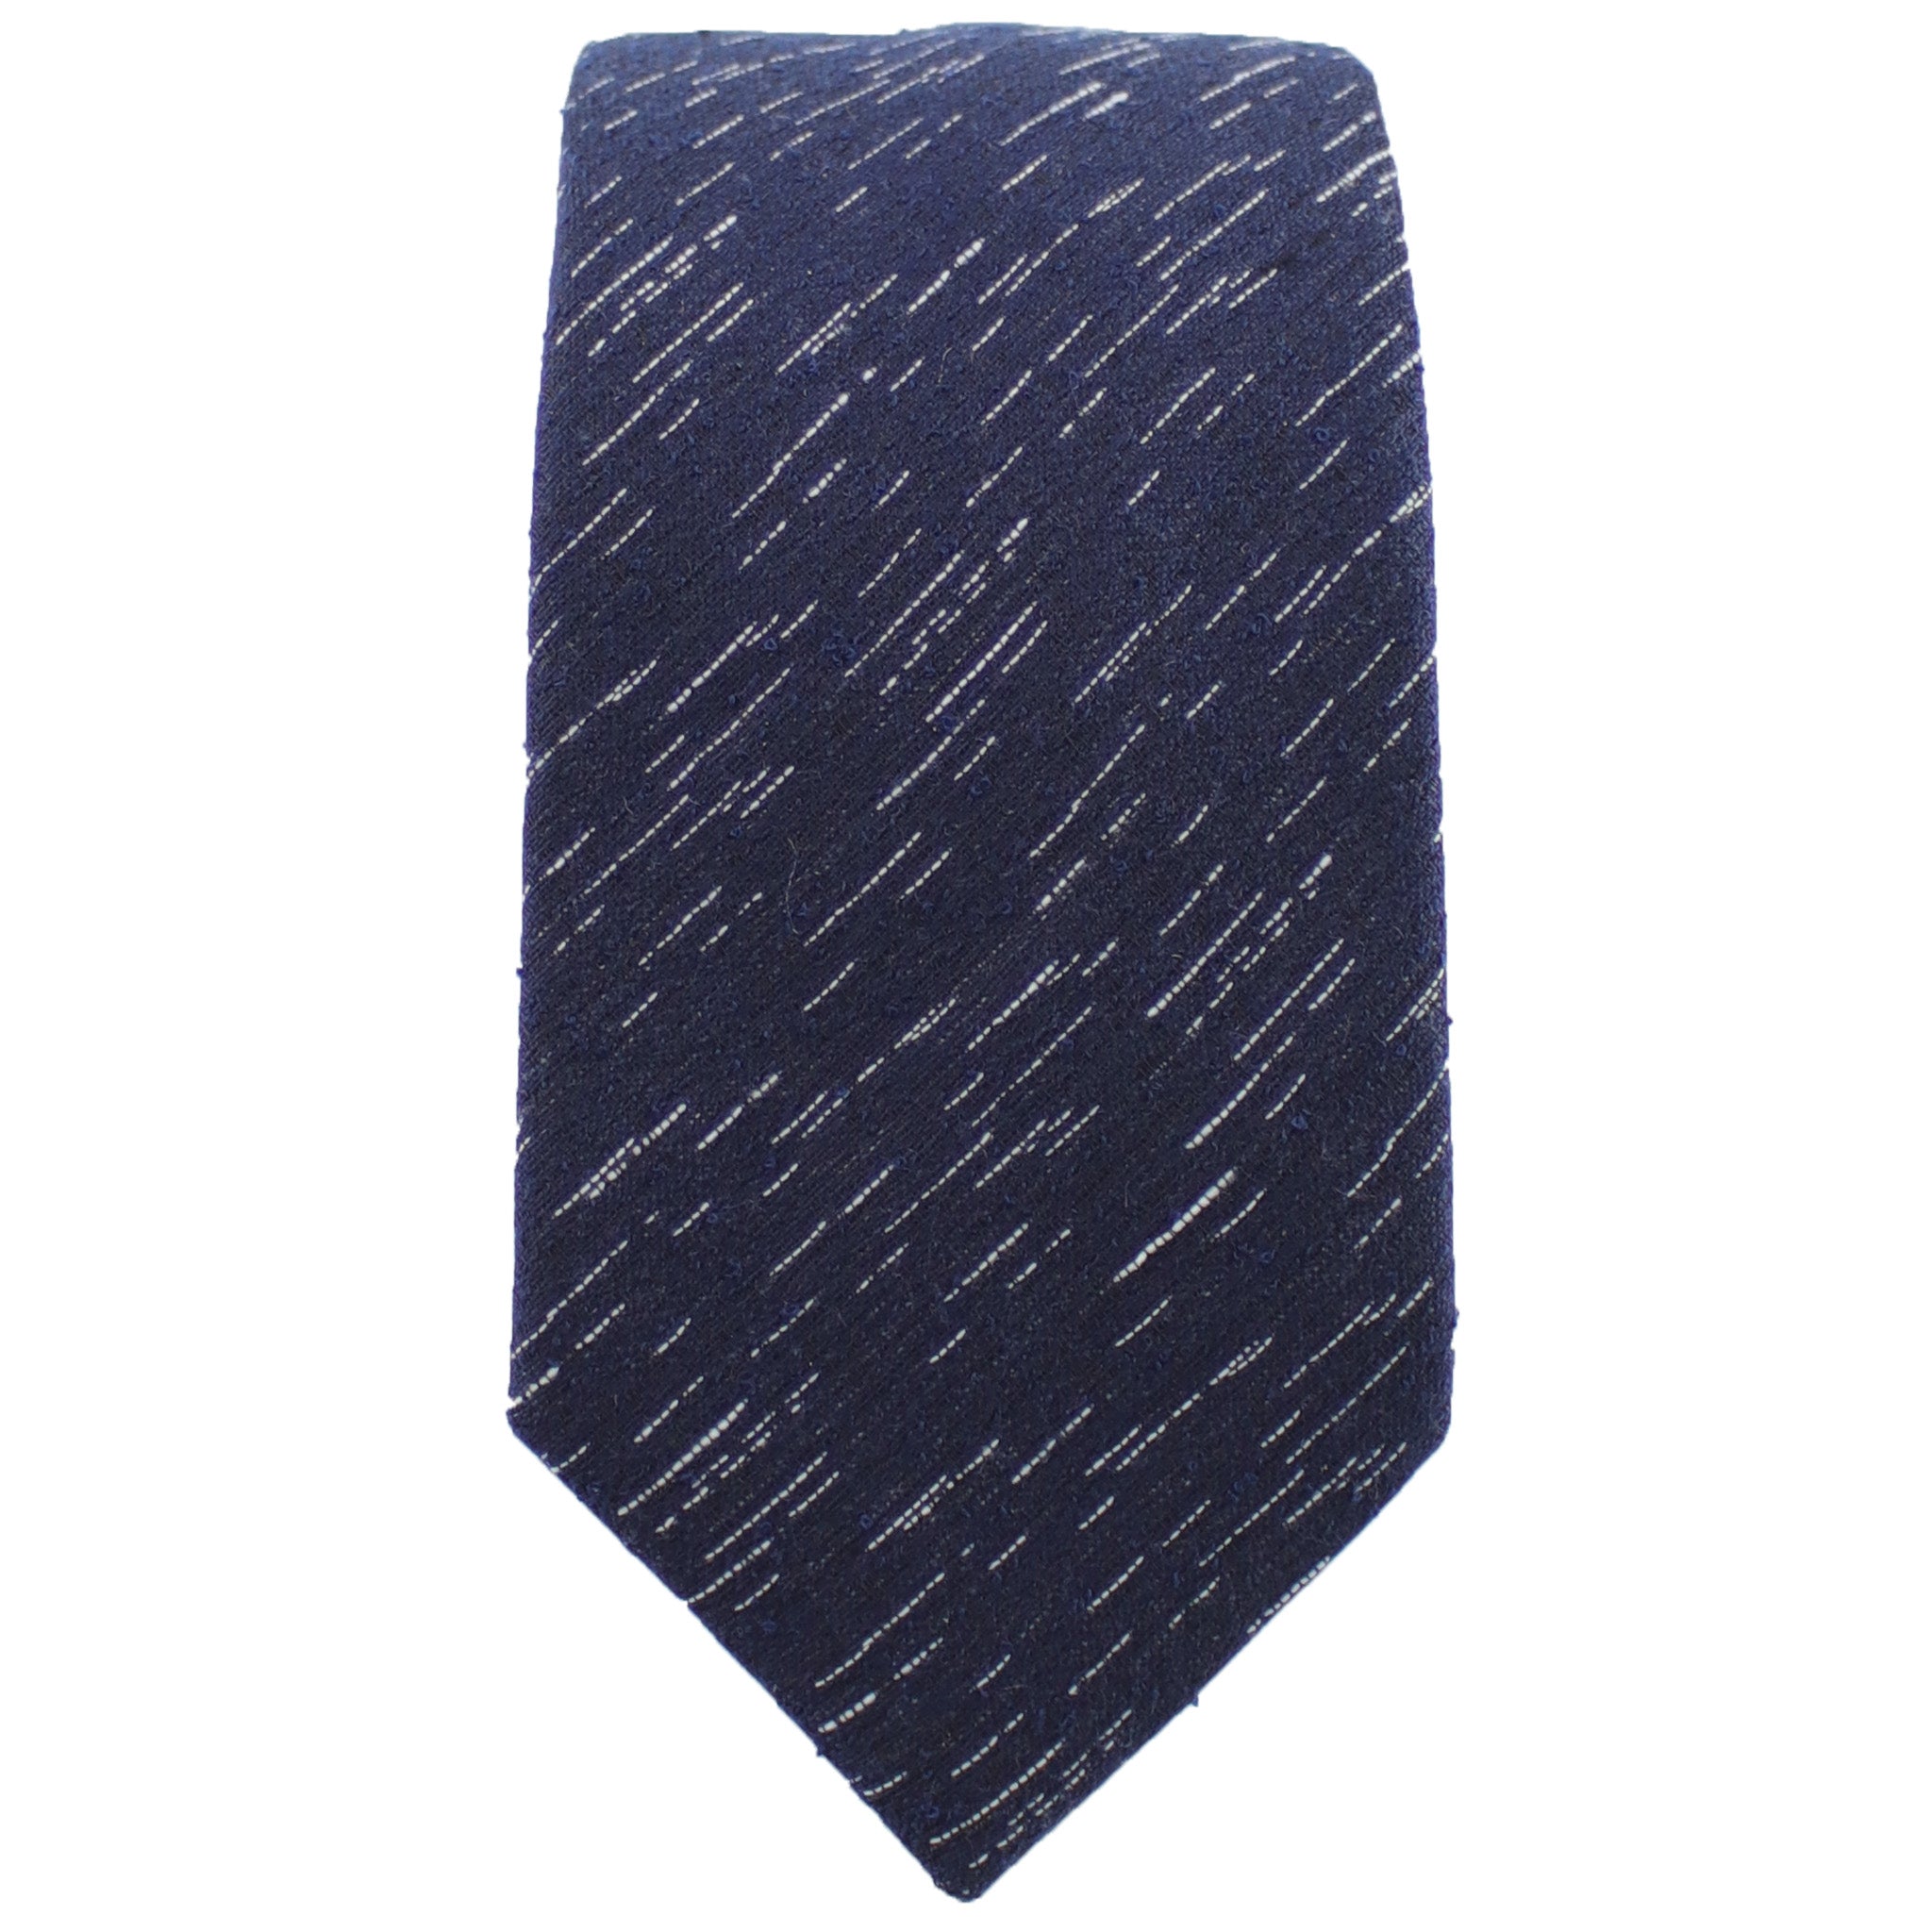 Navy Wool Textured Tie from DIBI